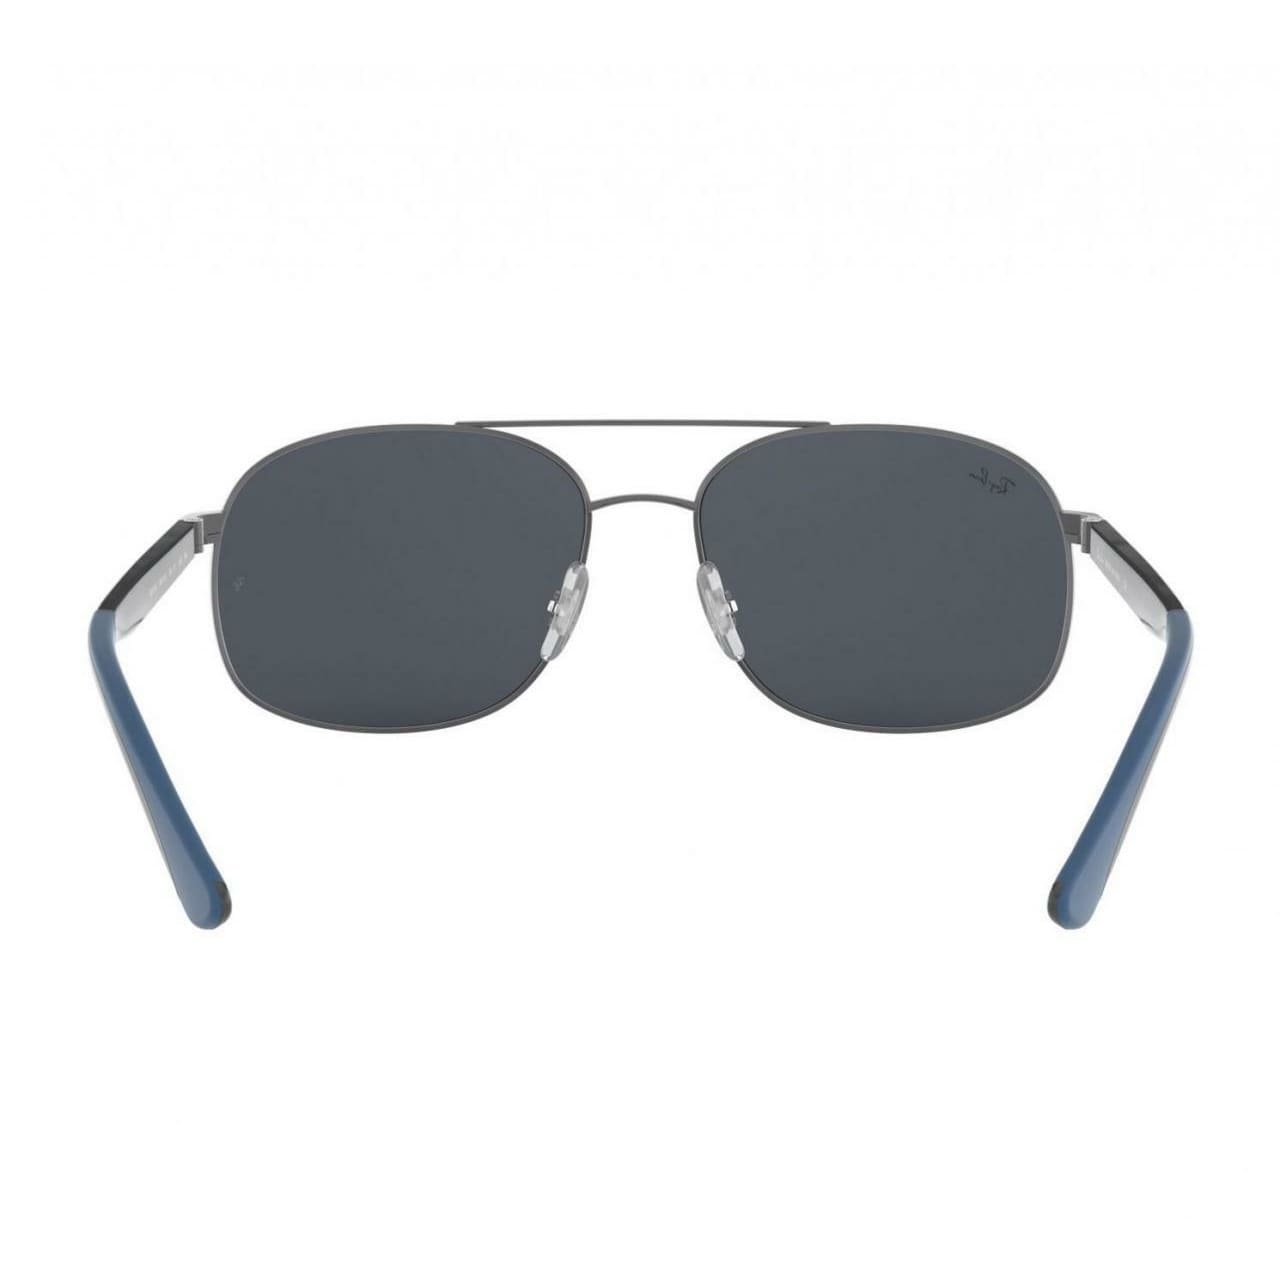 Ray-Ban RB3593-004/55 Gunmetal Grey Square Blue Mirror Lenses Metal Sunglasses Frames 8053672919851